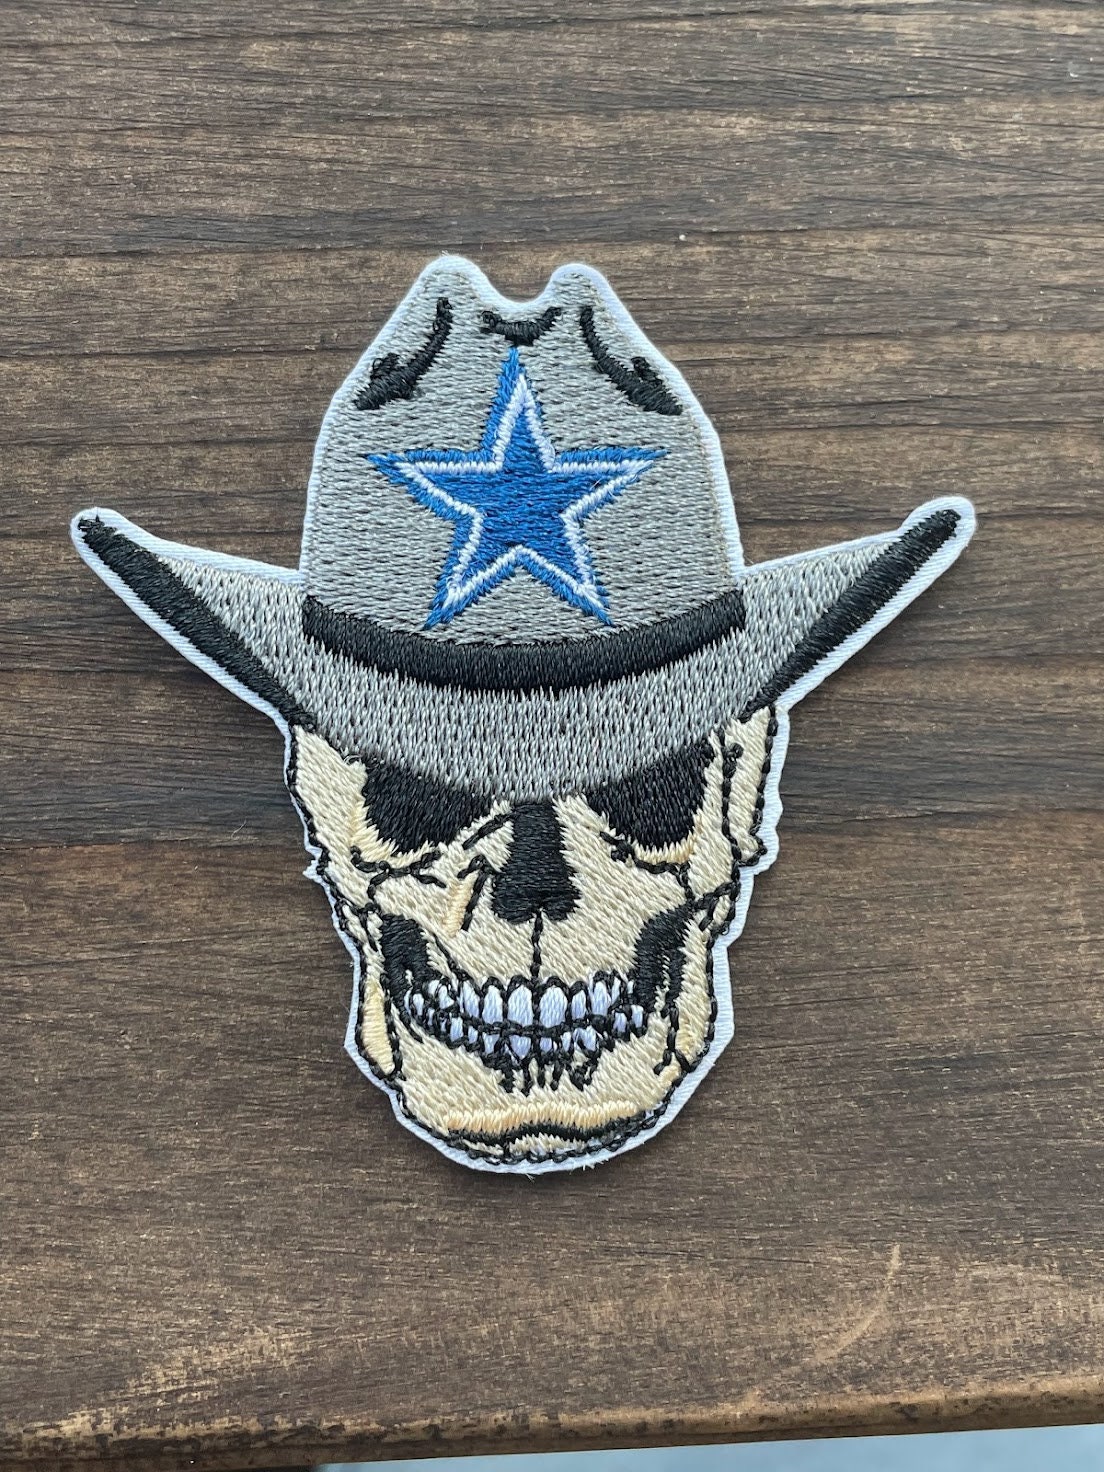 dallas cowboys skull hat